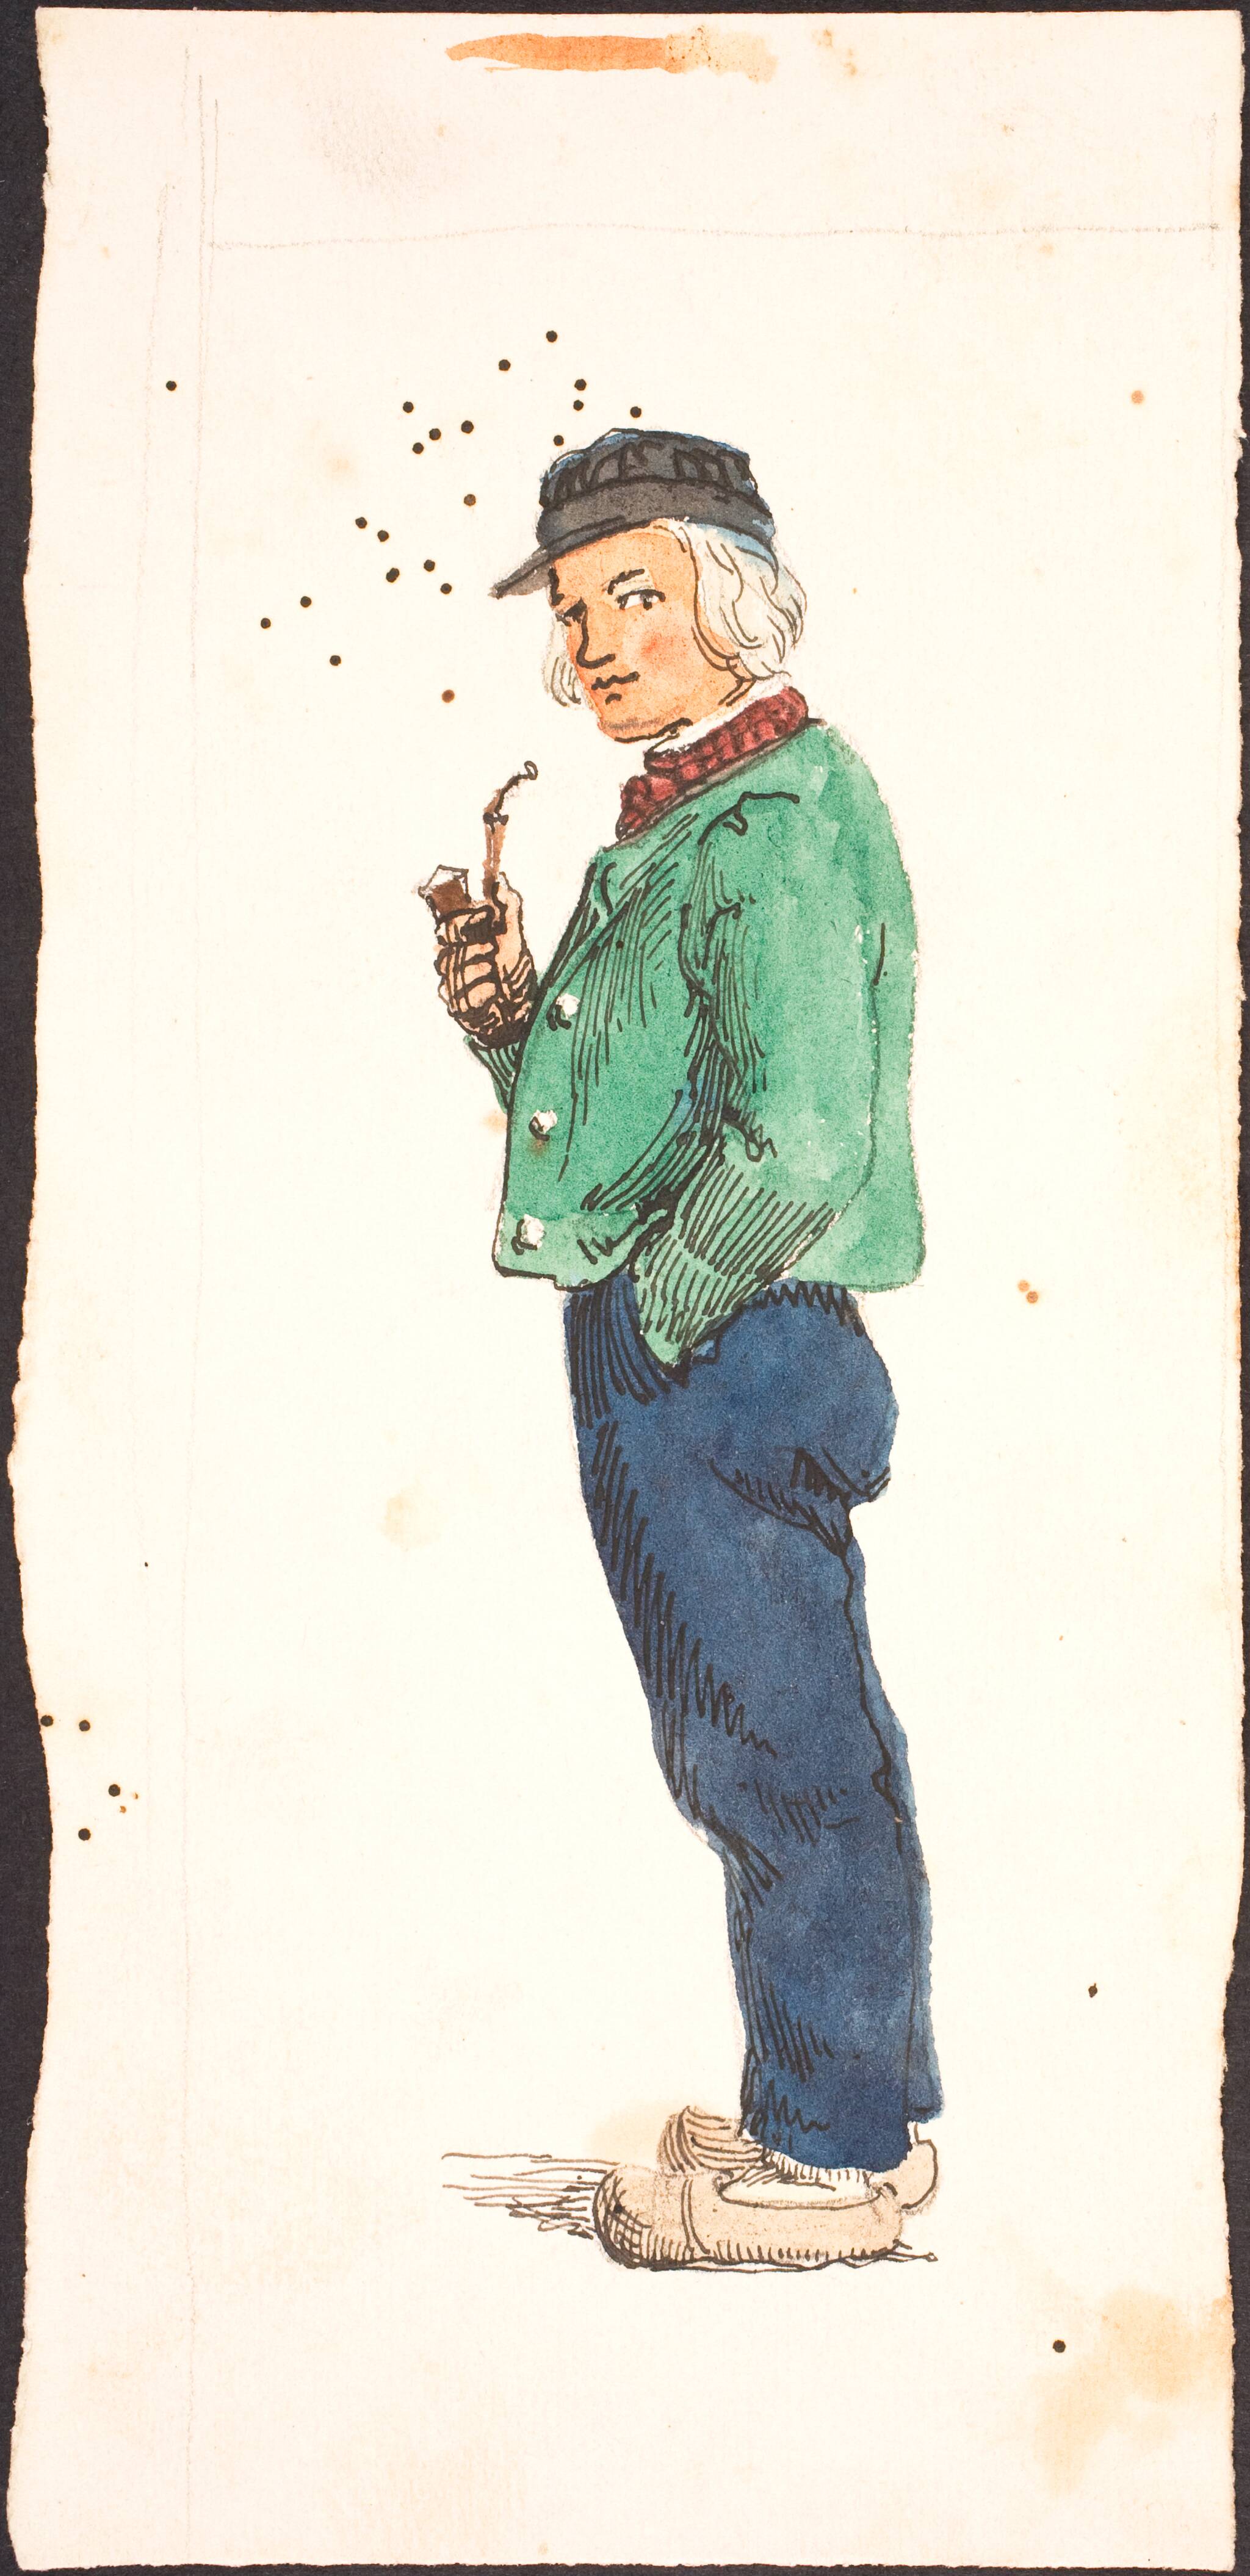 Piberygende i træsko, 1842 – 1846, Lorenz Frølich | SMK Open